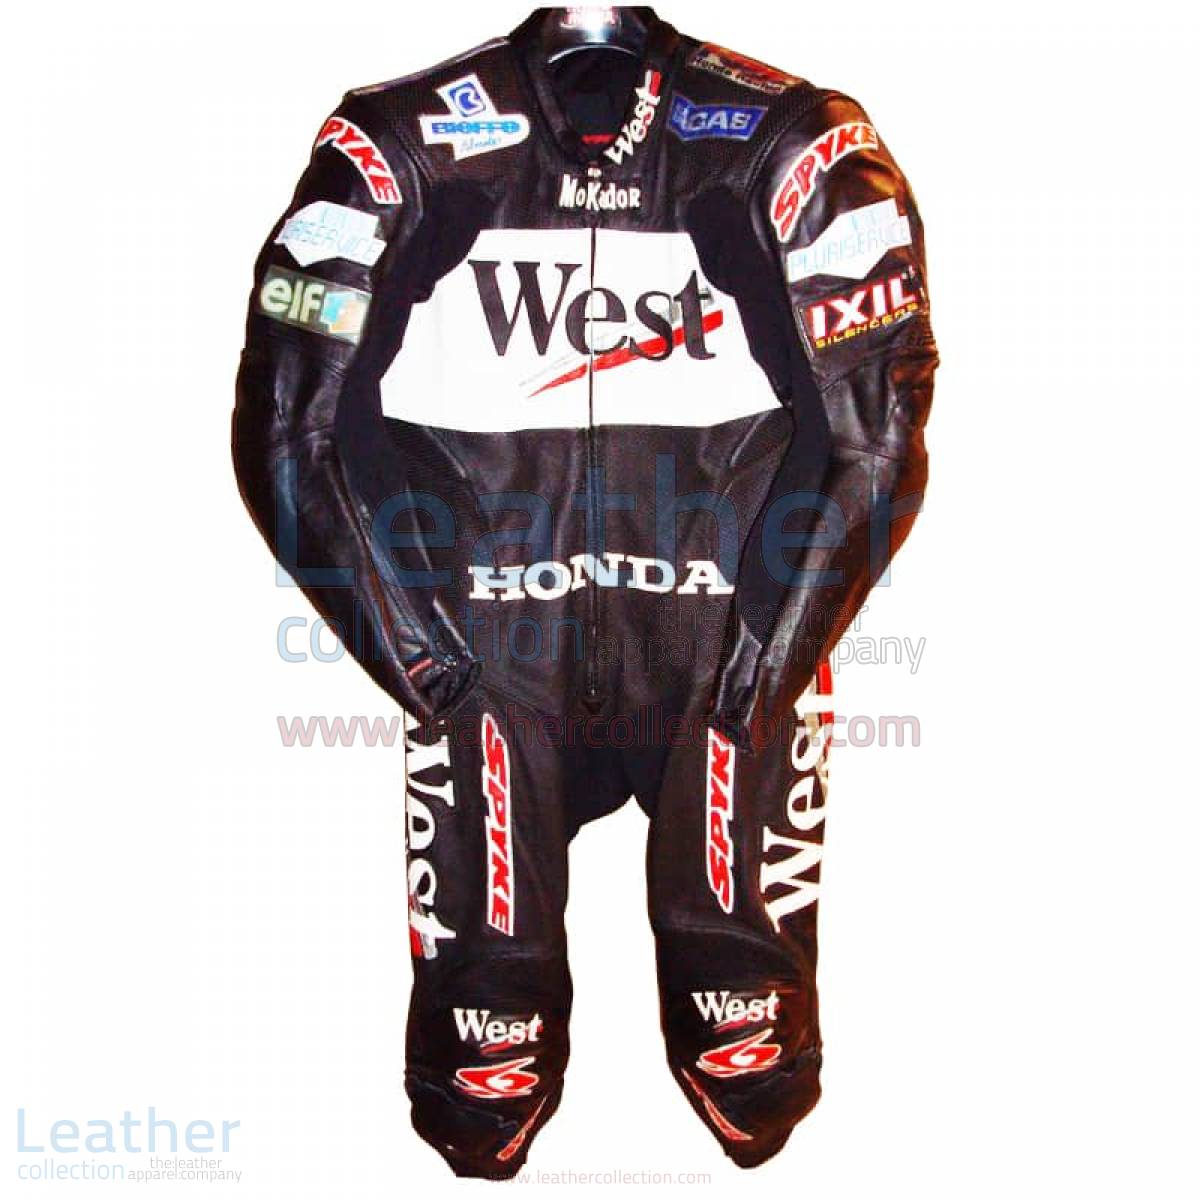 Loris Capirossi Honda GP 2001 Motorcycle Leathers – Honda Suit